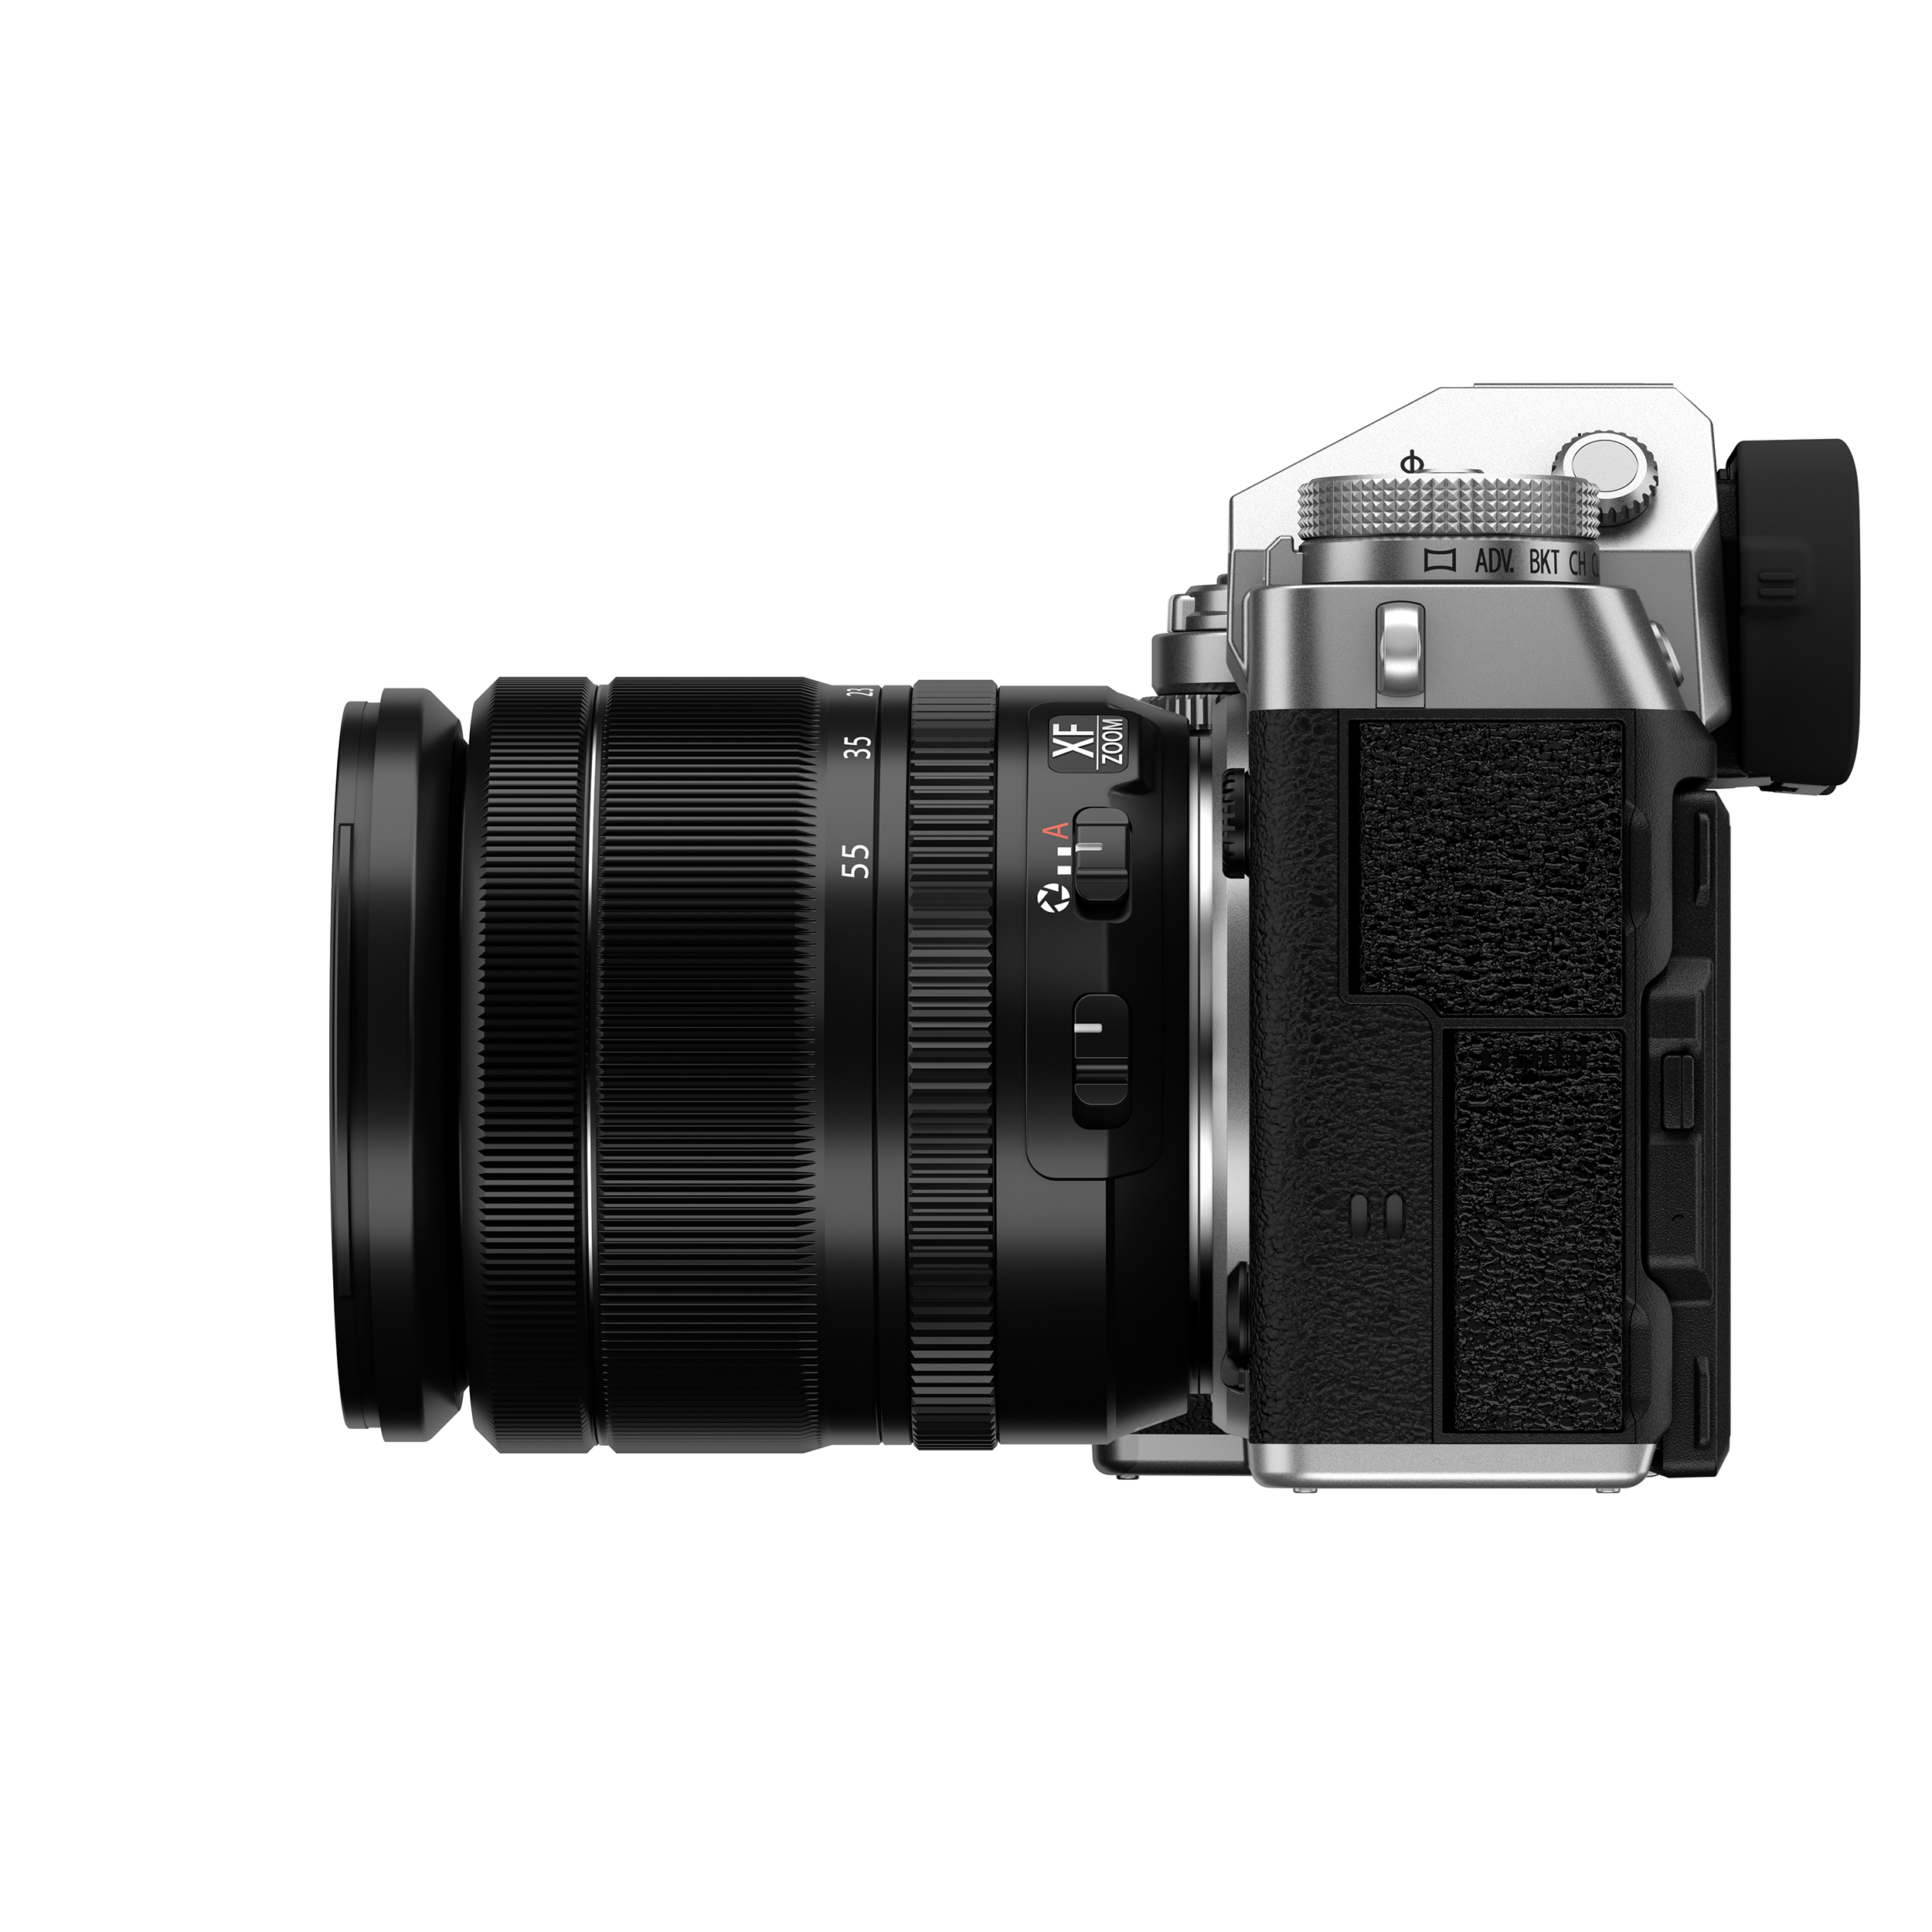 Fujifilm X-T5 Mirrorless Camera with 18-55mm Lens